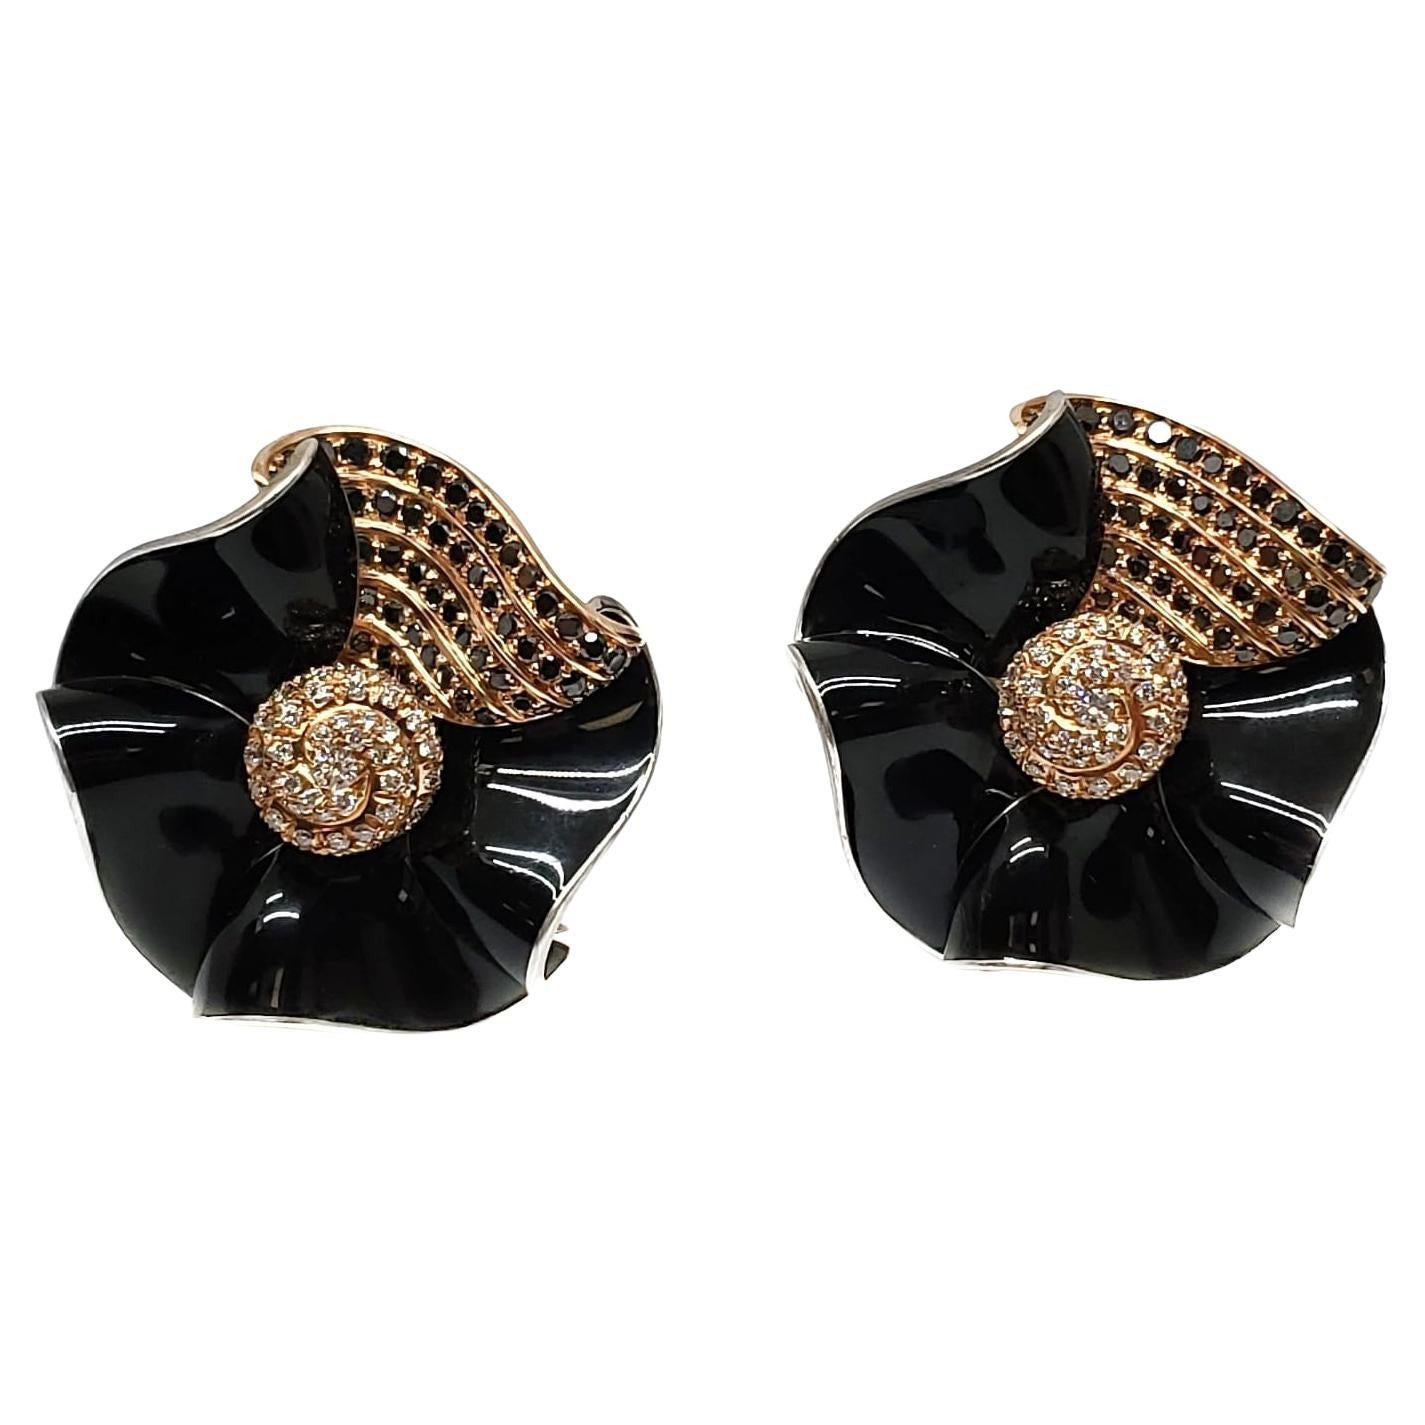 Andreoli Black Diamond Enamel 18 Karat Two-Tone Gold Earrings